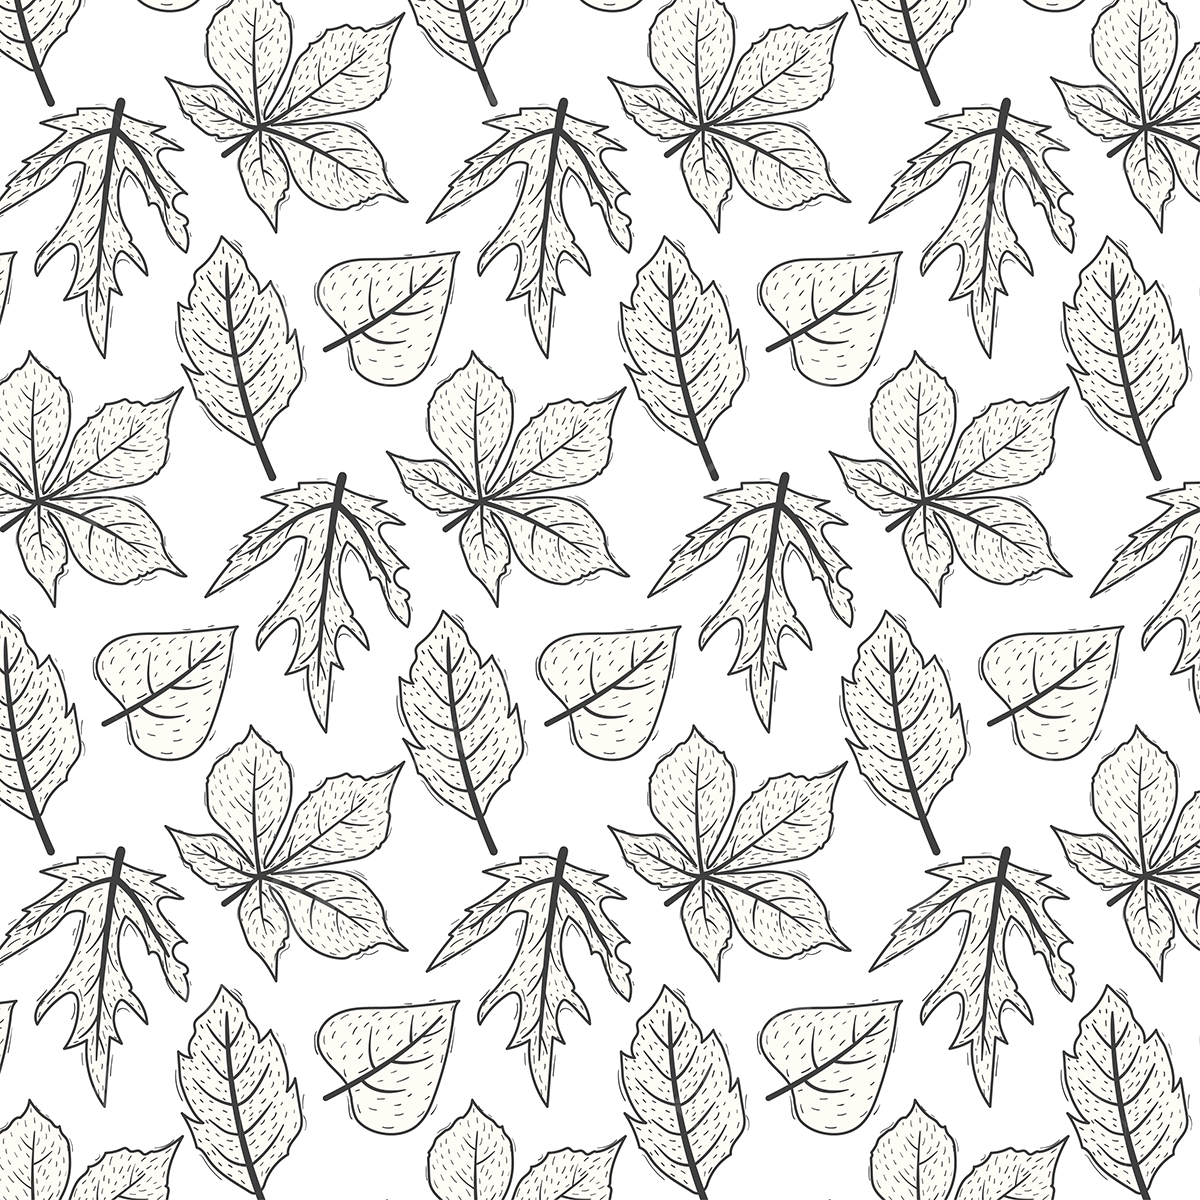 Cute Autumn Leaves Doodle Pattern Background, Sketch, Illustration, Doodle Background Image for Free Download